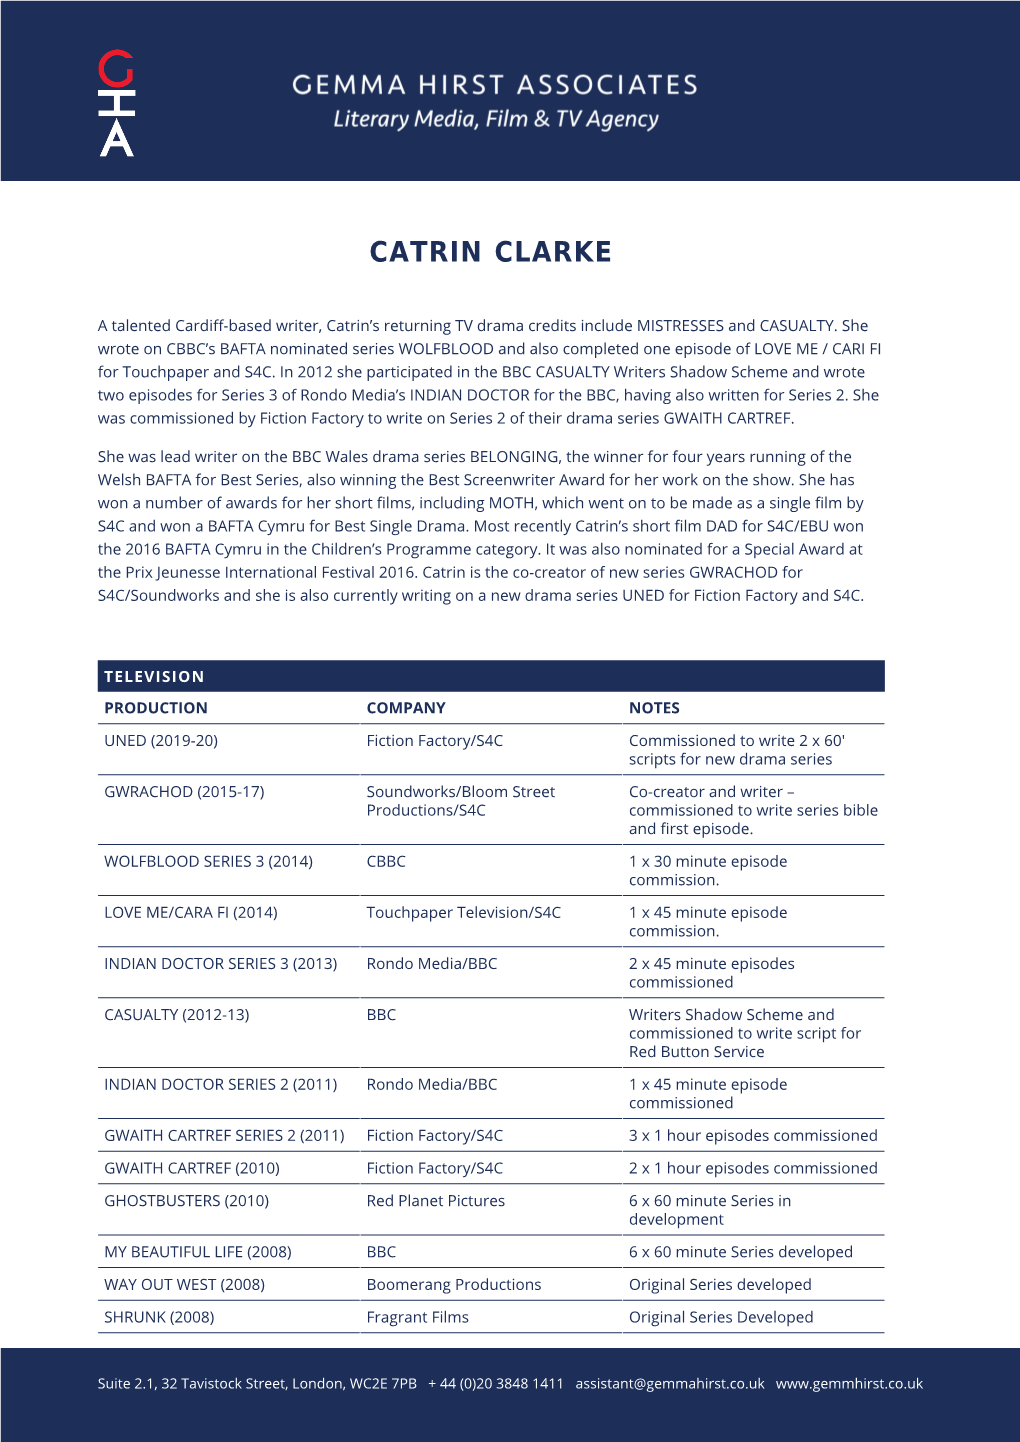 Catrin Clarke